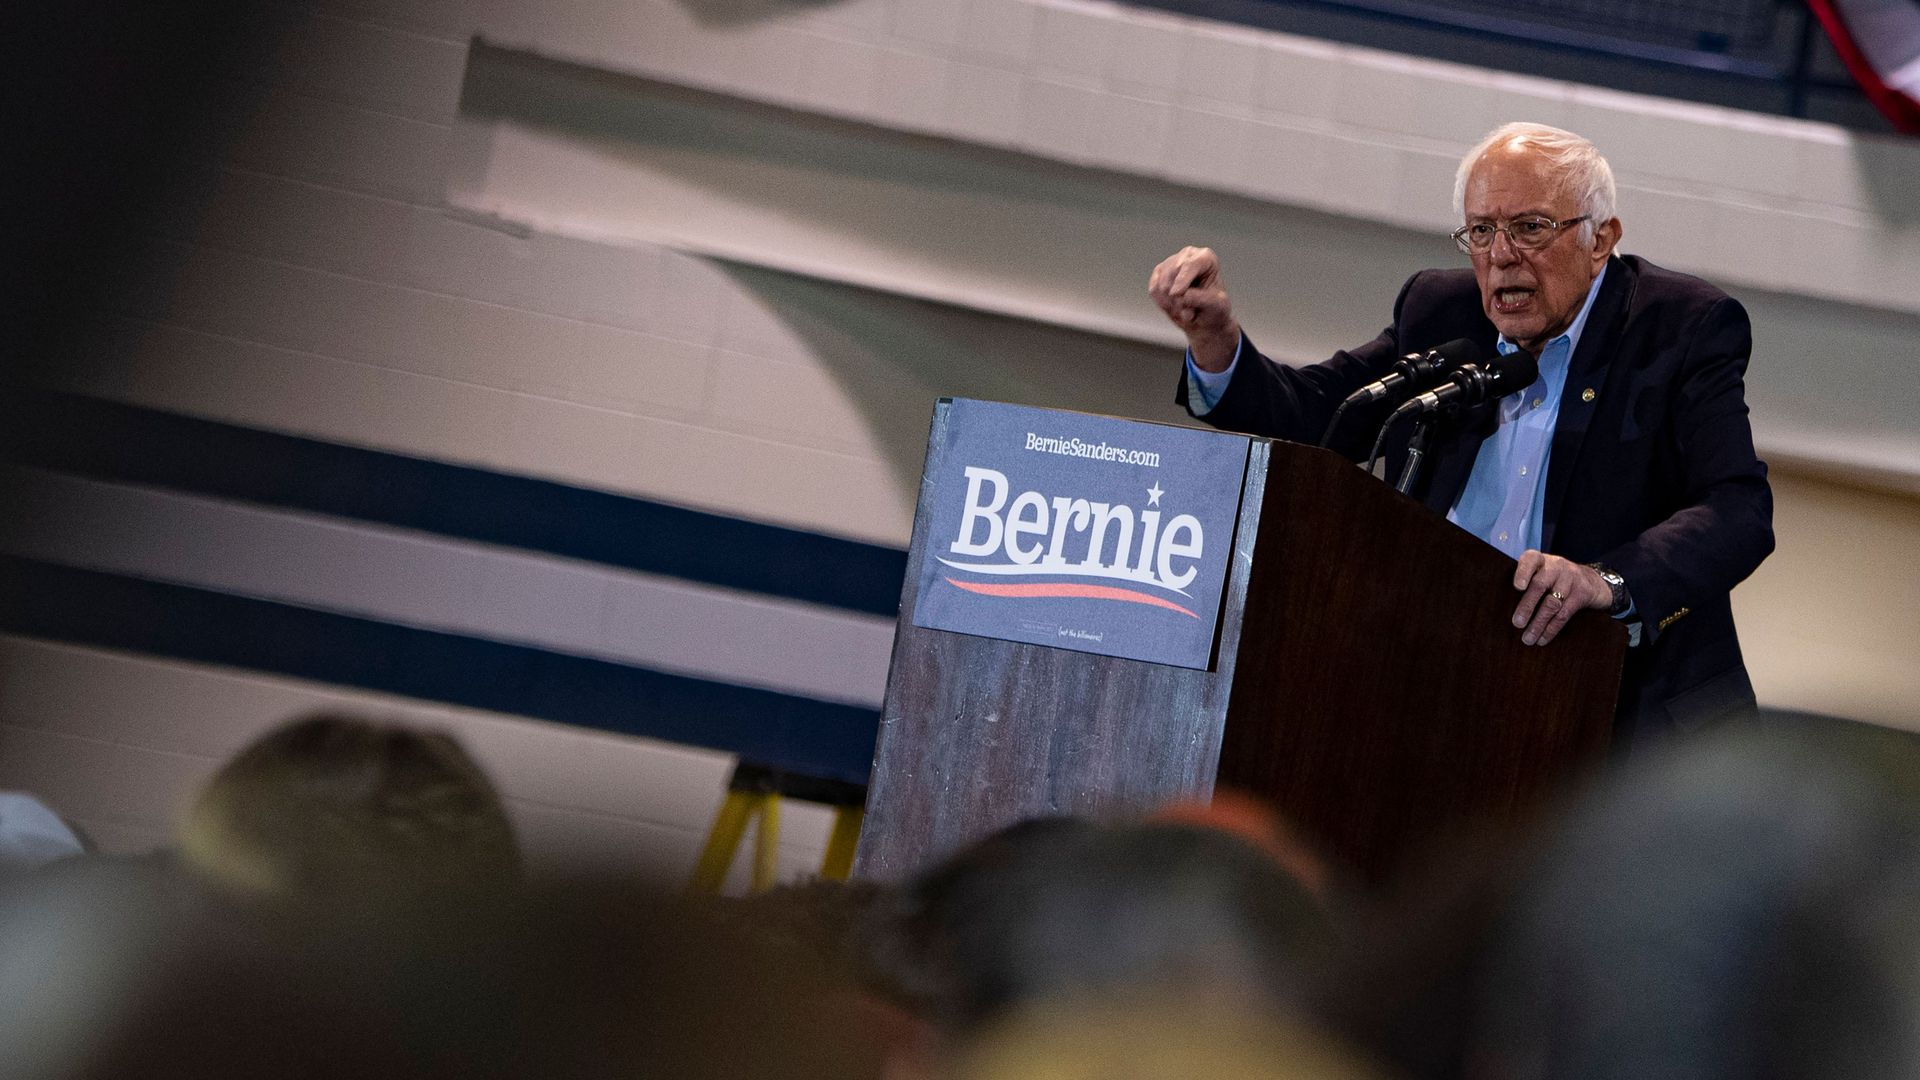 Sanders speaking at a campaign rally in Virginia Beach, Virginia